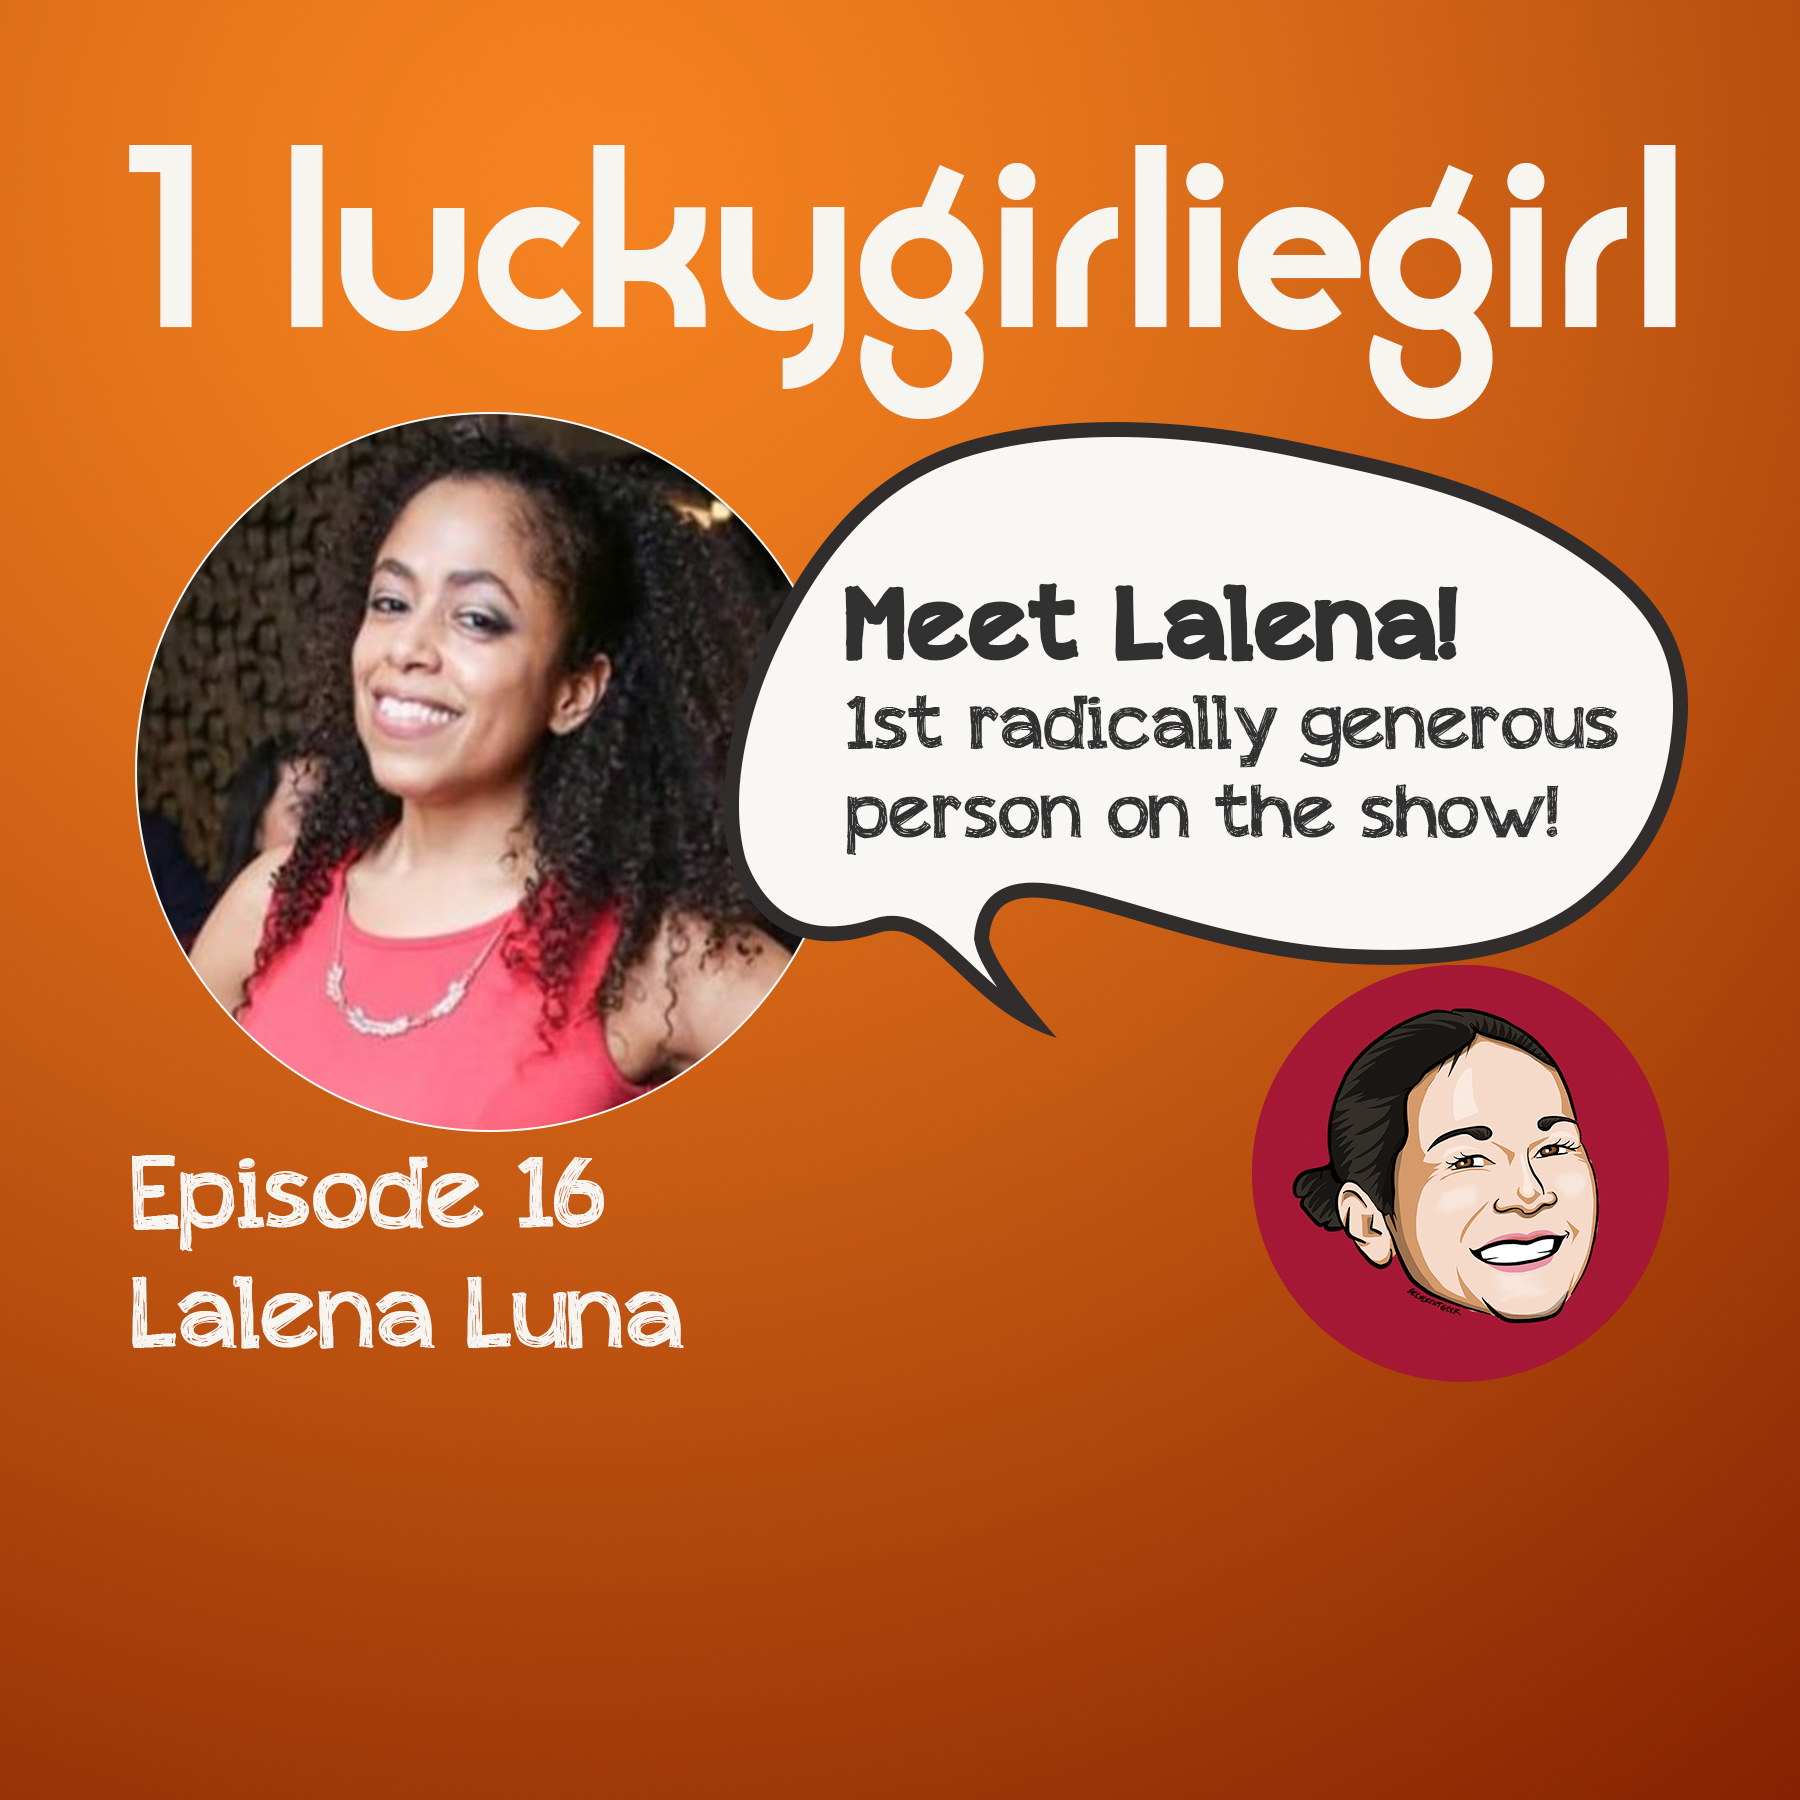 1 Luckygirliegirl Podcast